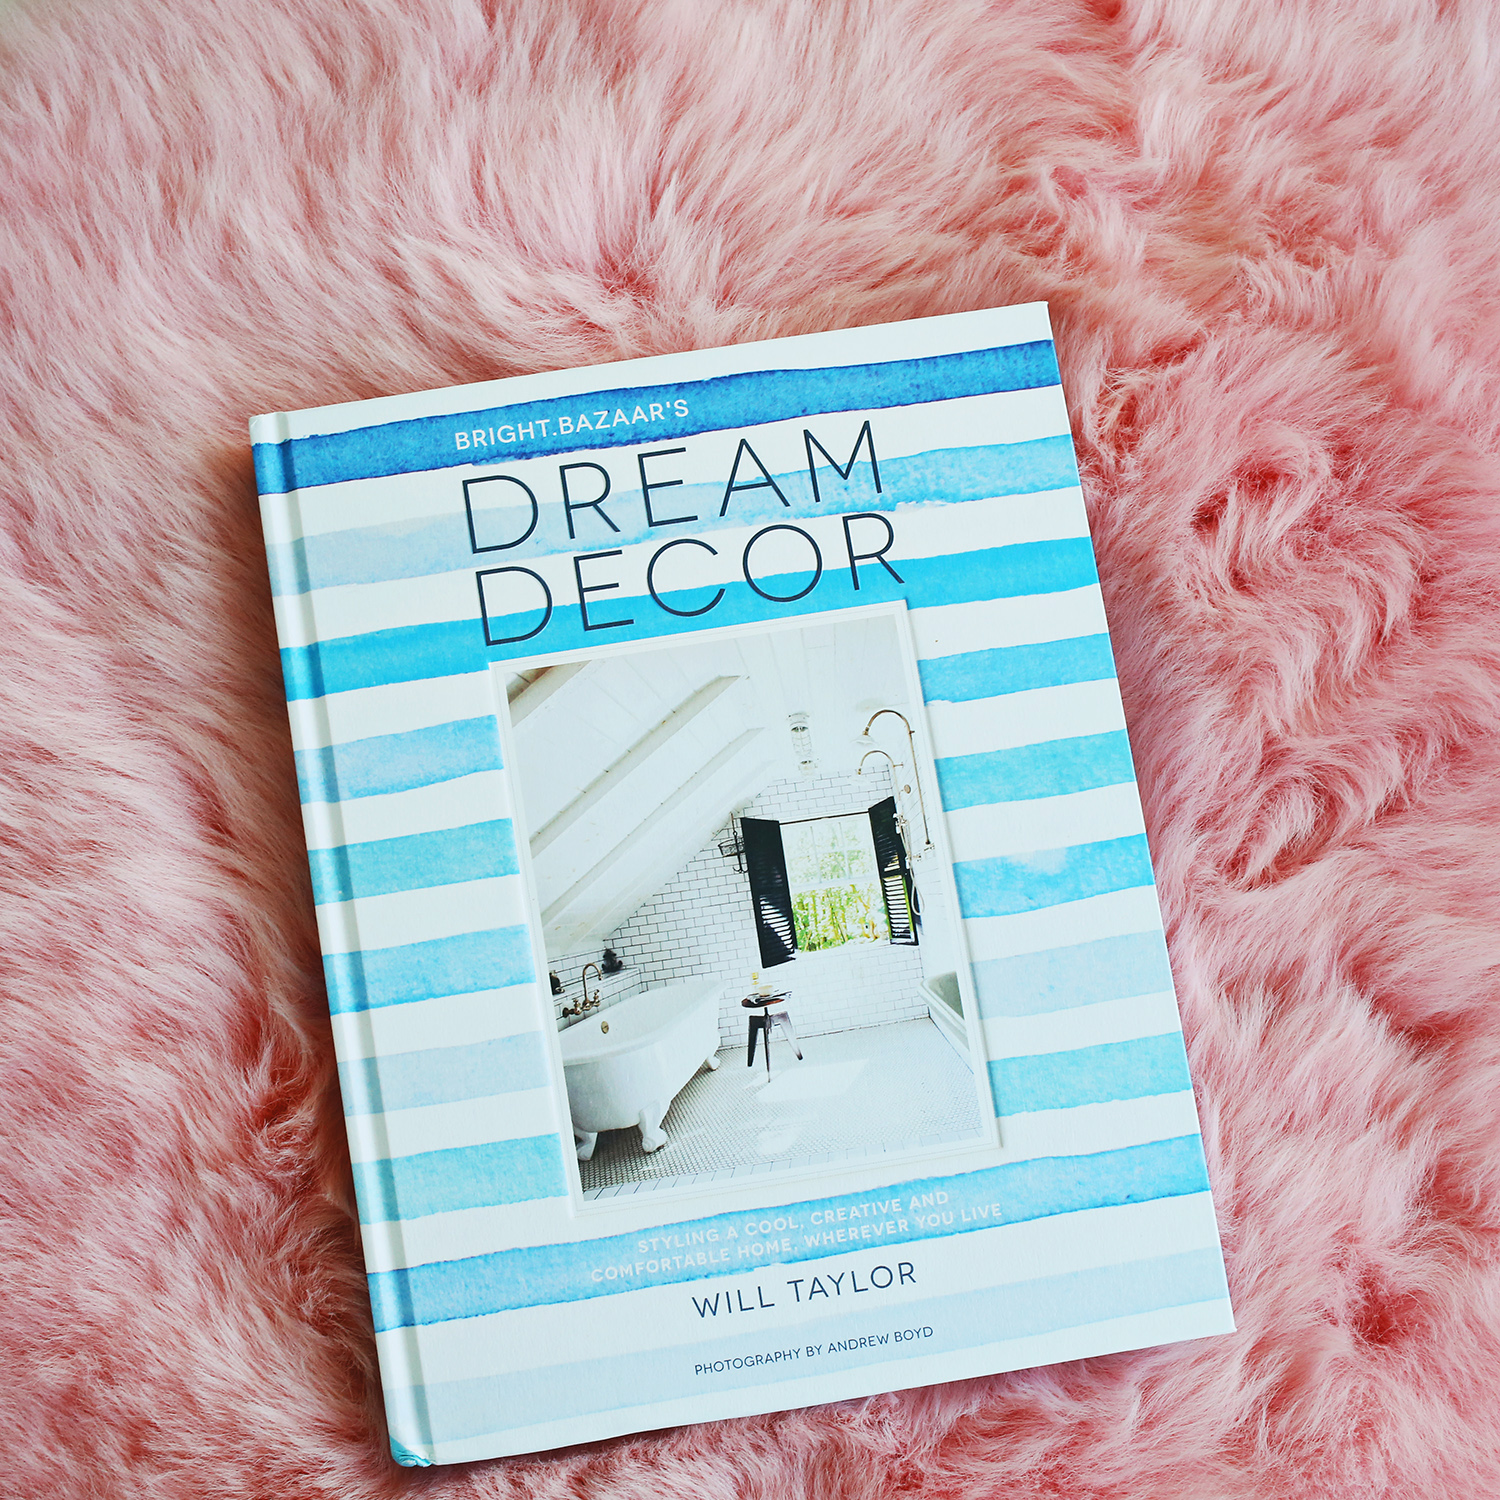 Dream Decor by Bright Bazaar